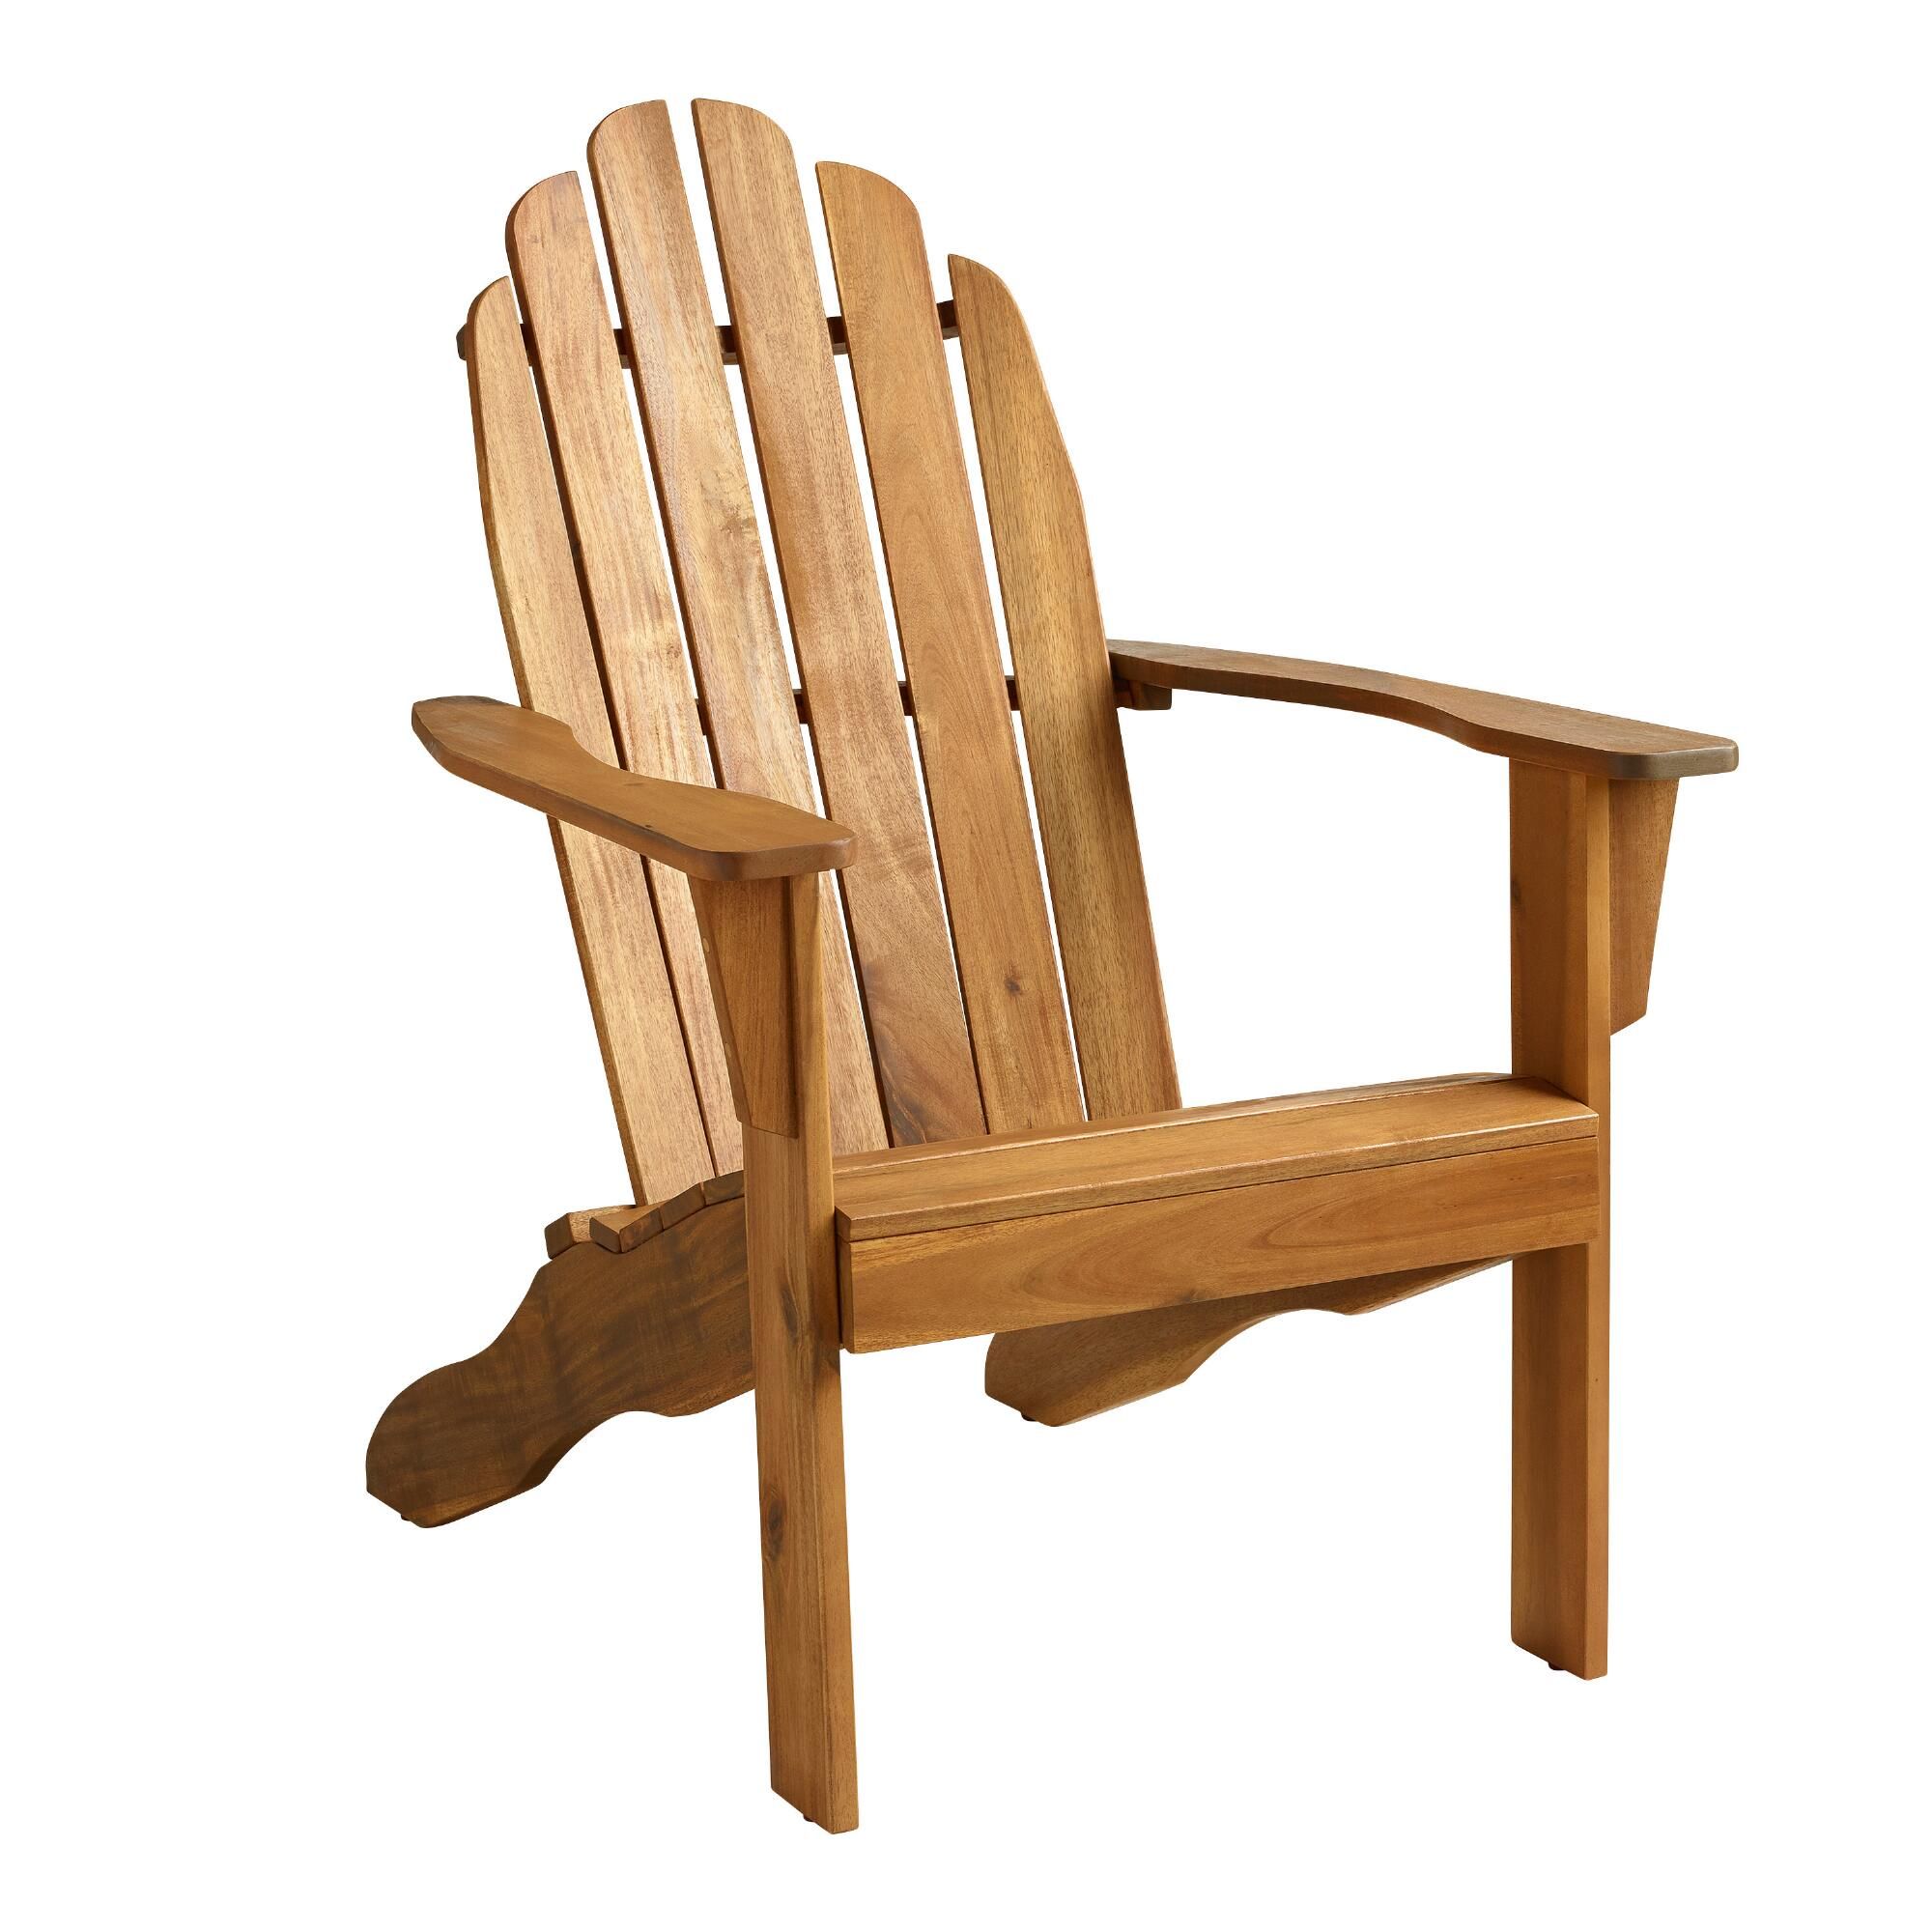 Slatted Wood Adirondack Chair - World Market | World Market